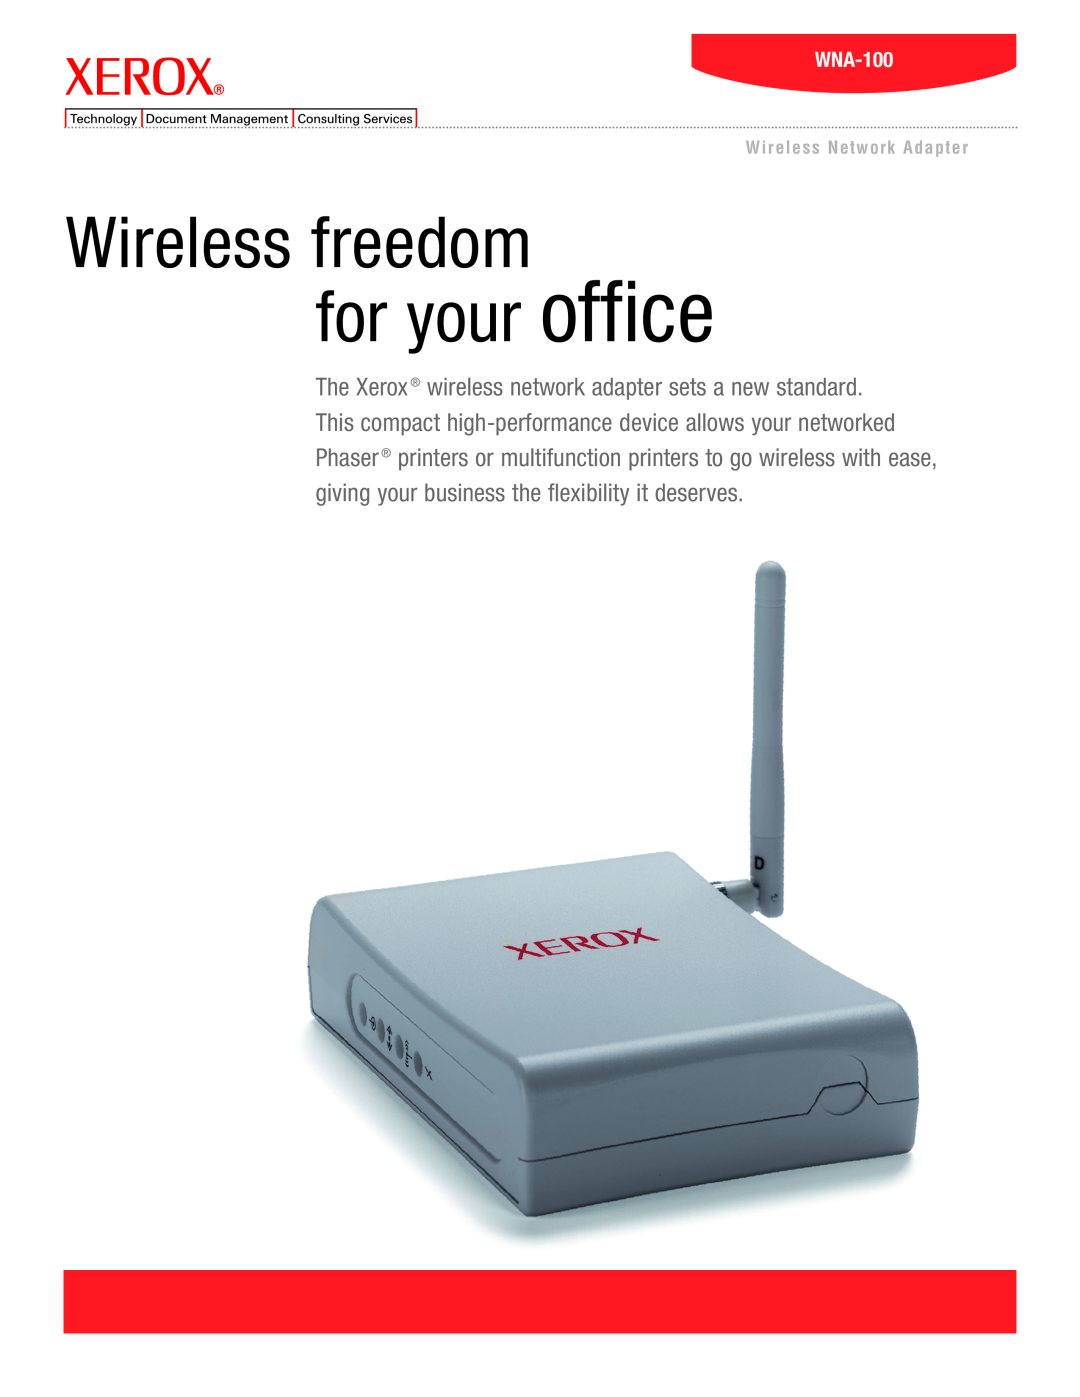 Xerox WNA-100 manual Wireless freedom for your office, Wireless Network Adapter 